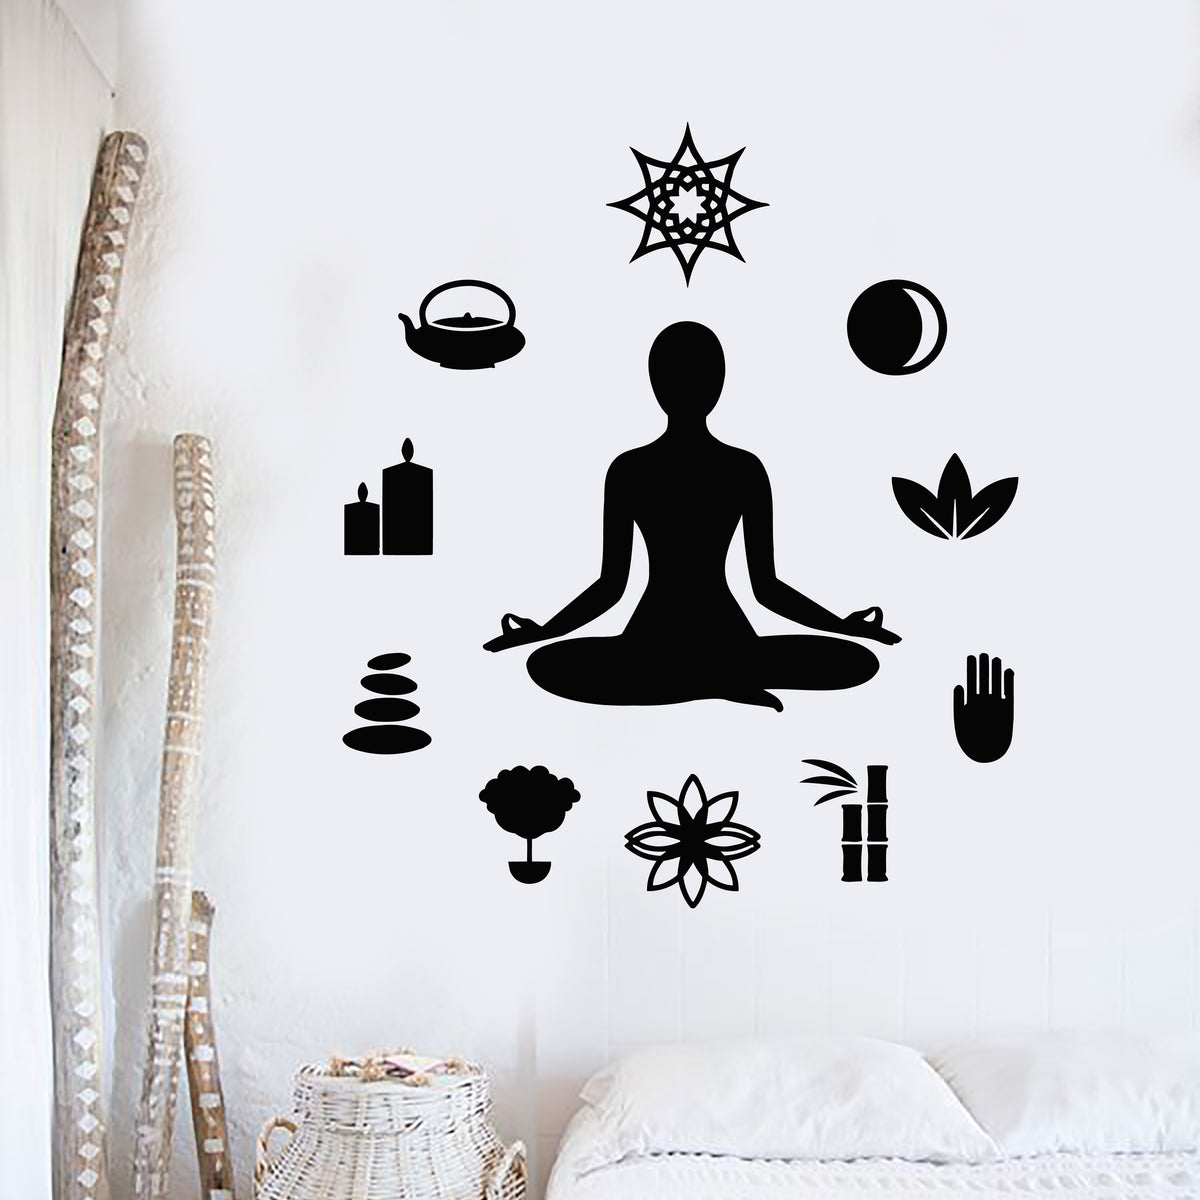 Vinyl Wall Decal Enso Tree Of Life Zen Circle Buddhism Yoga